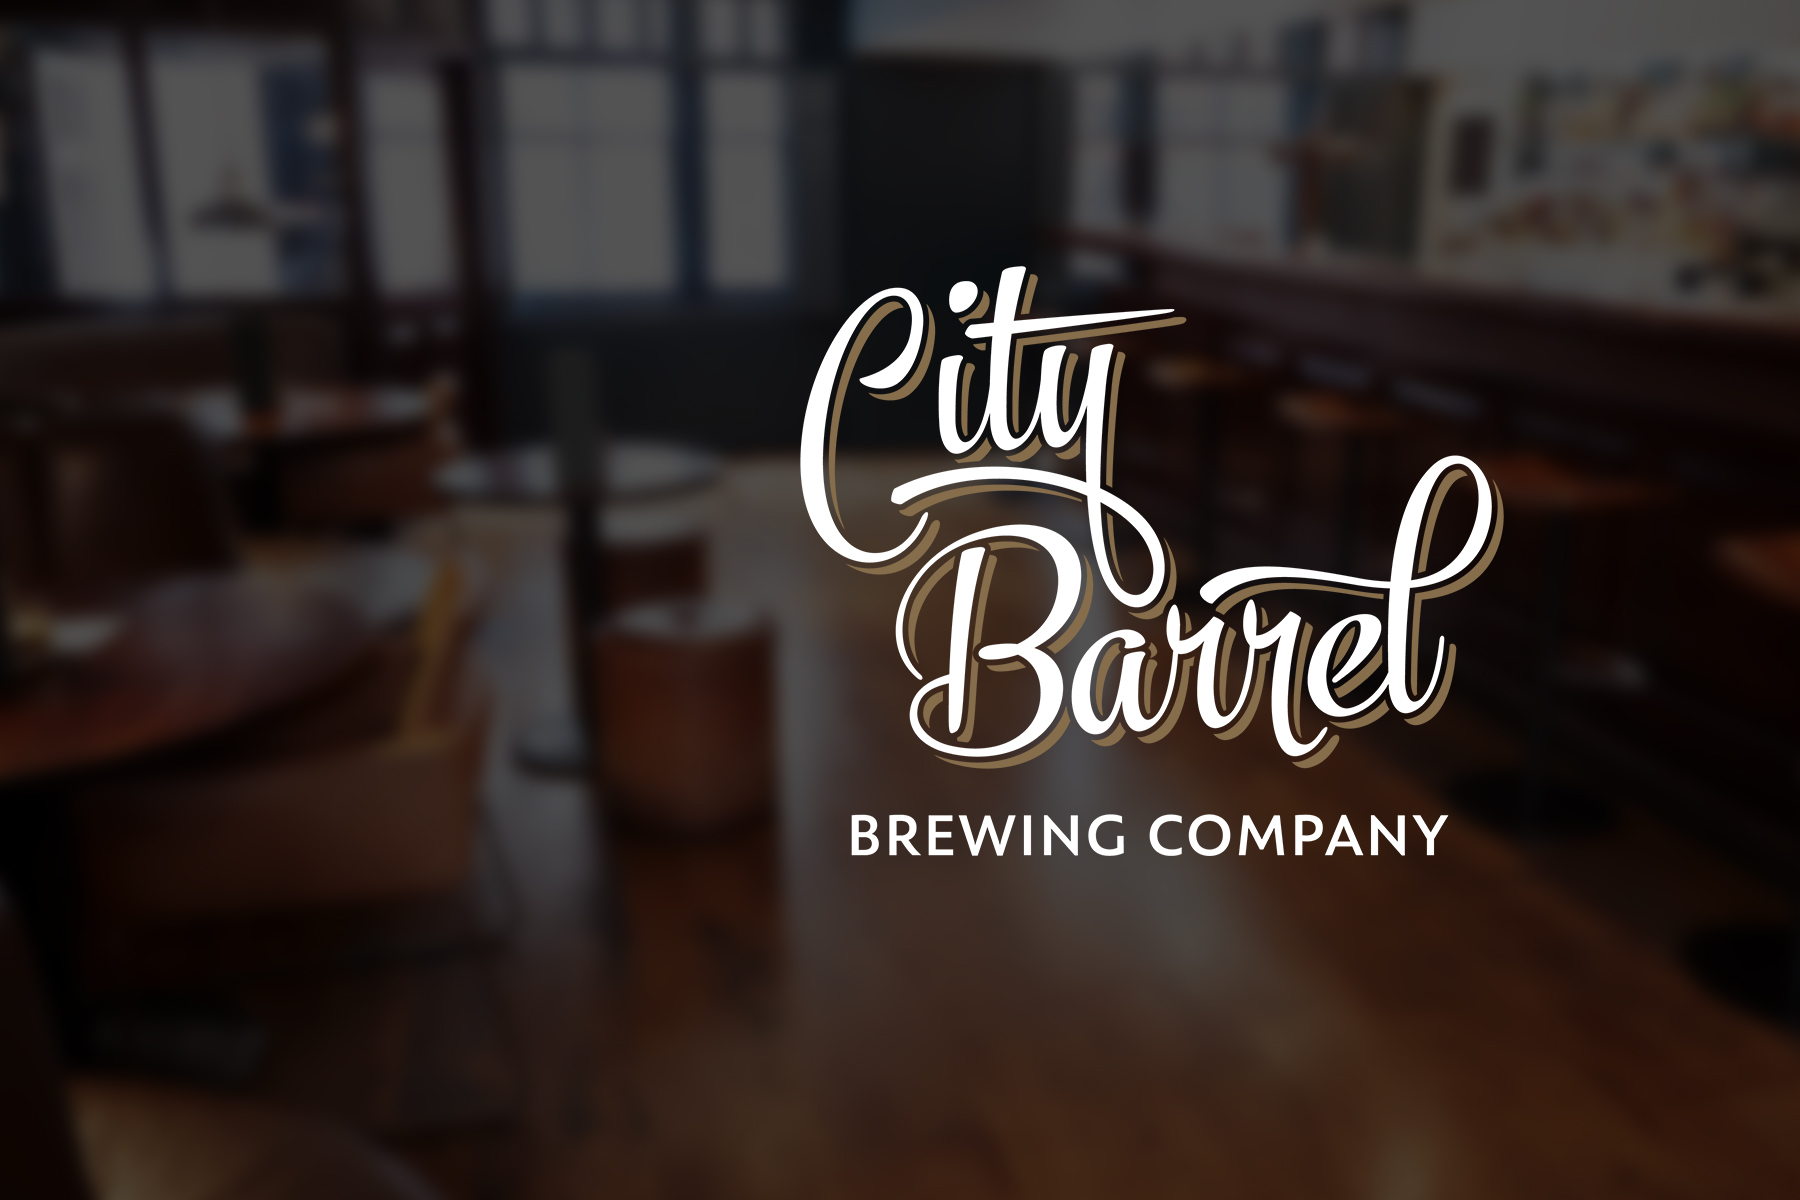 City Barrel Brewing Company design by Lagom Design